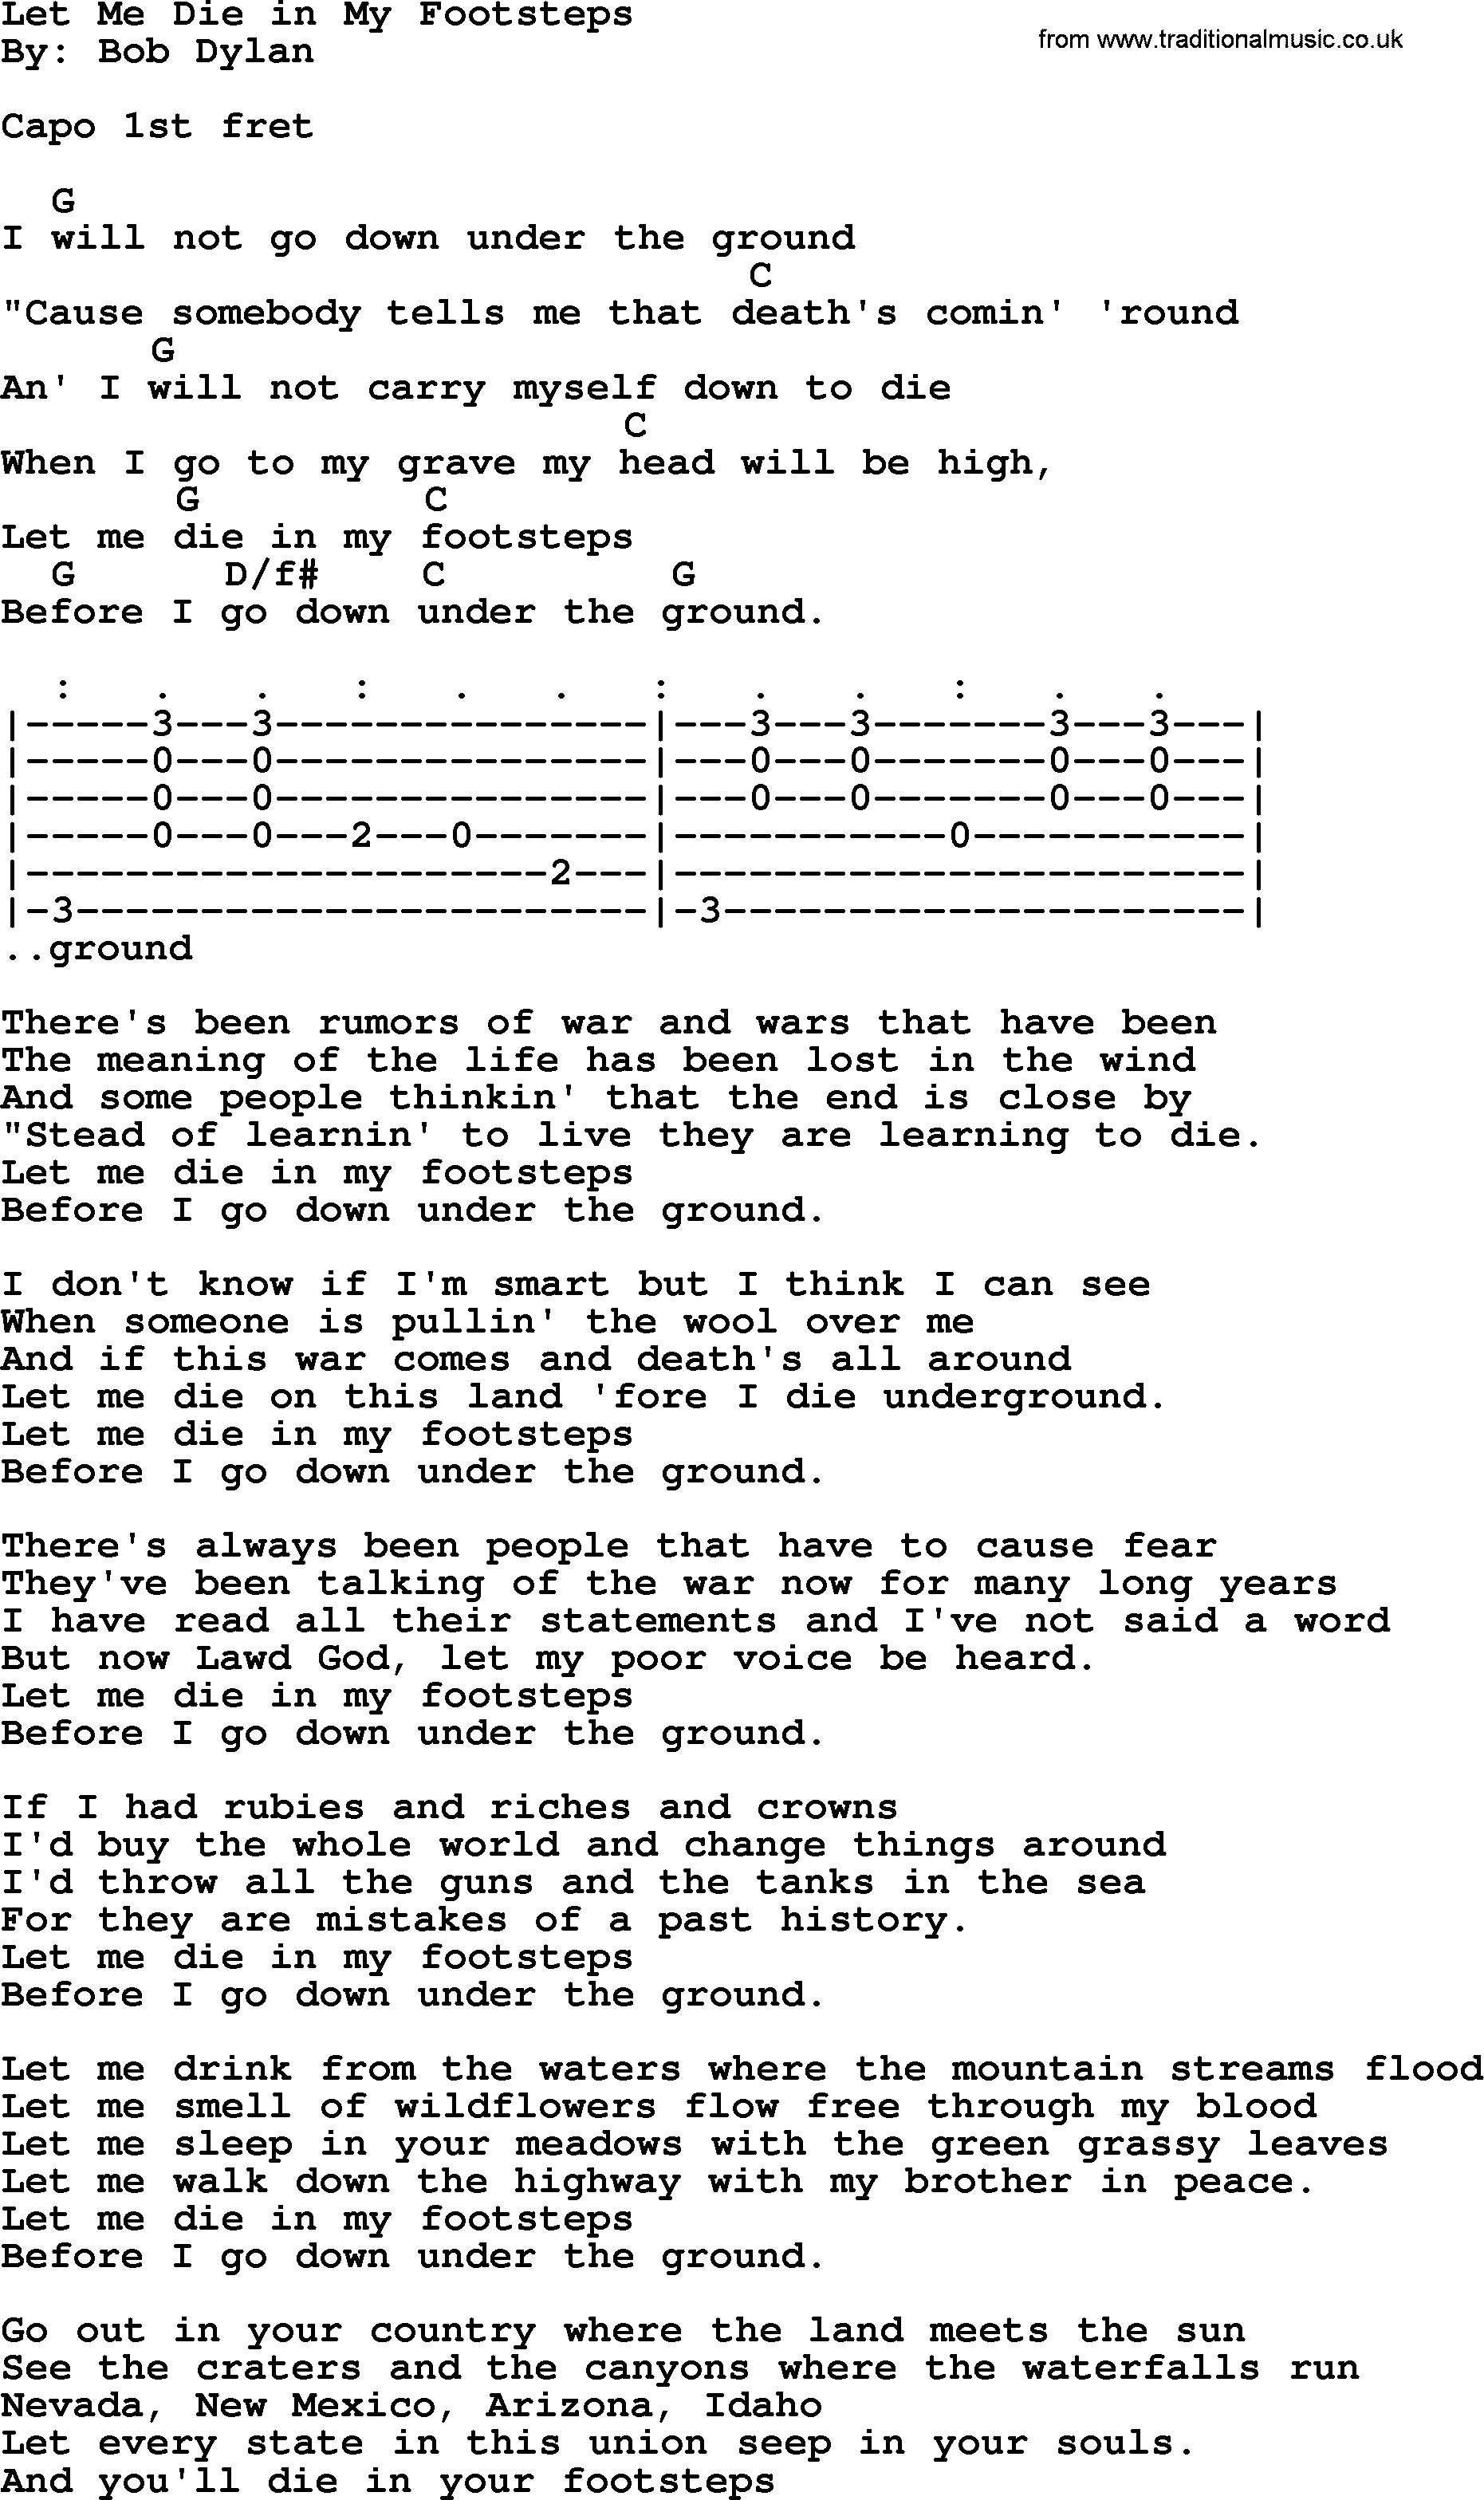 Bob Dylan song, lyrics with chords - Let Me Die in My Footsteps